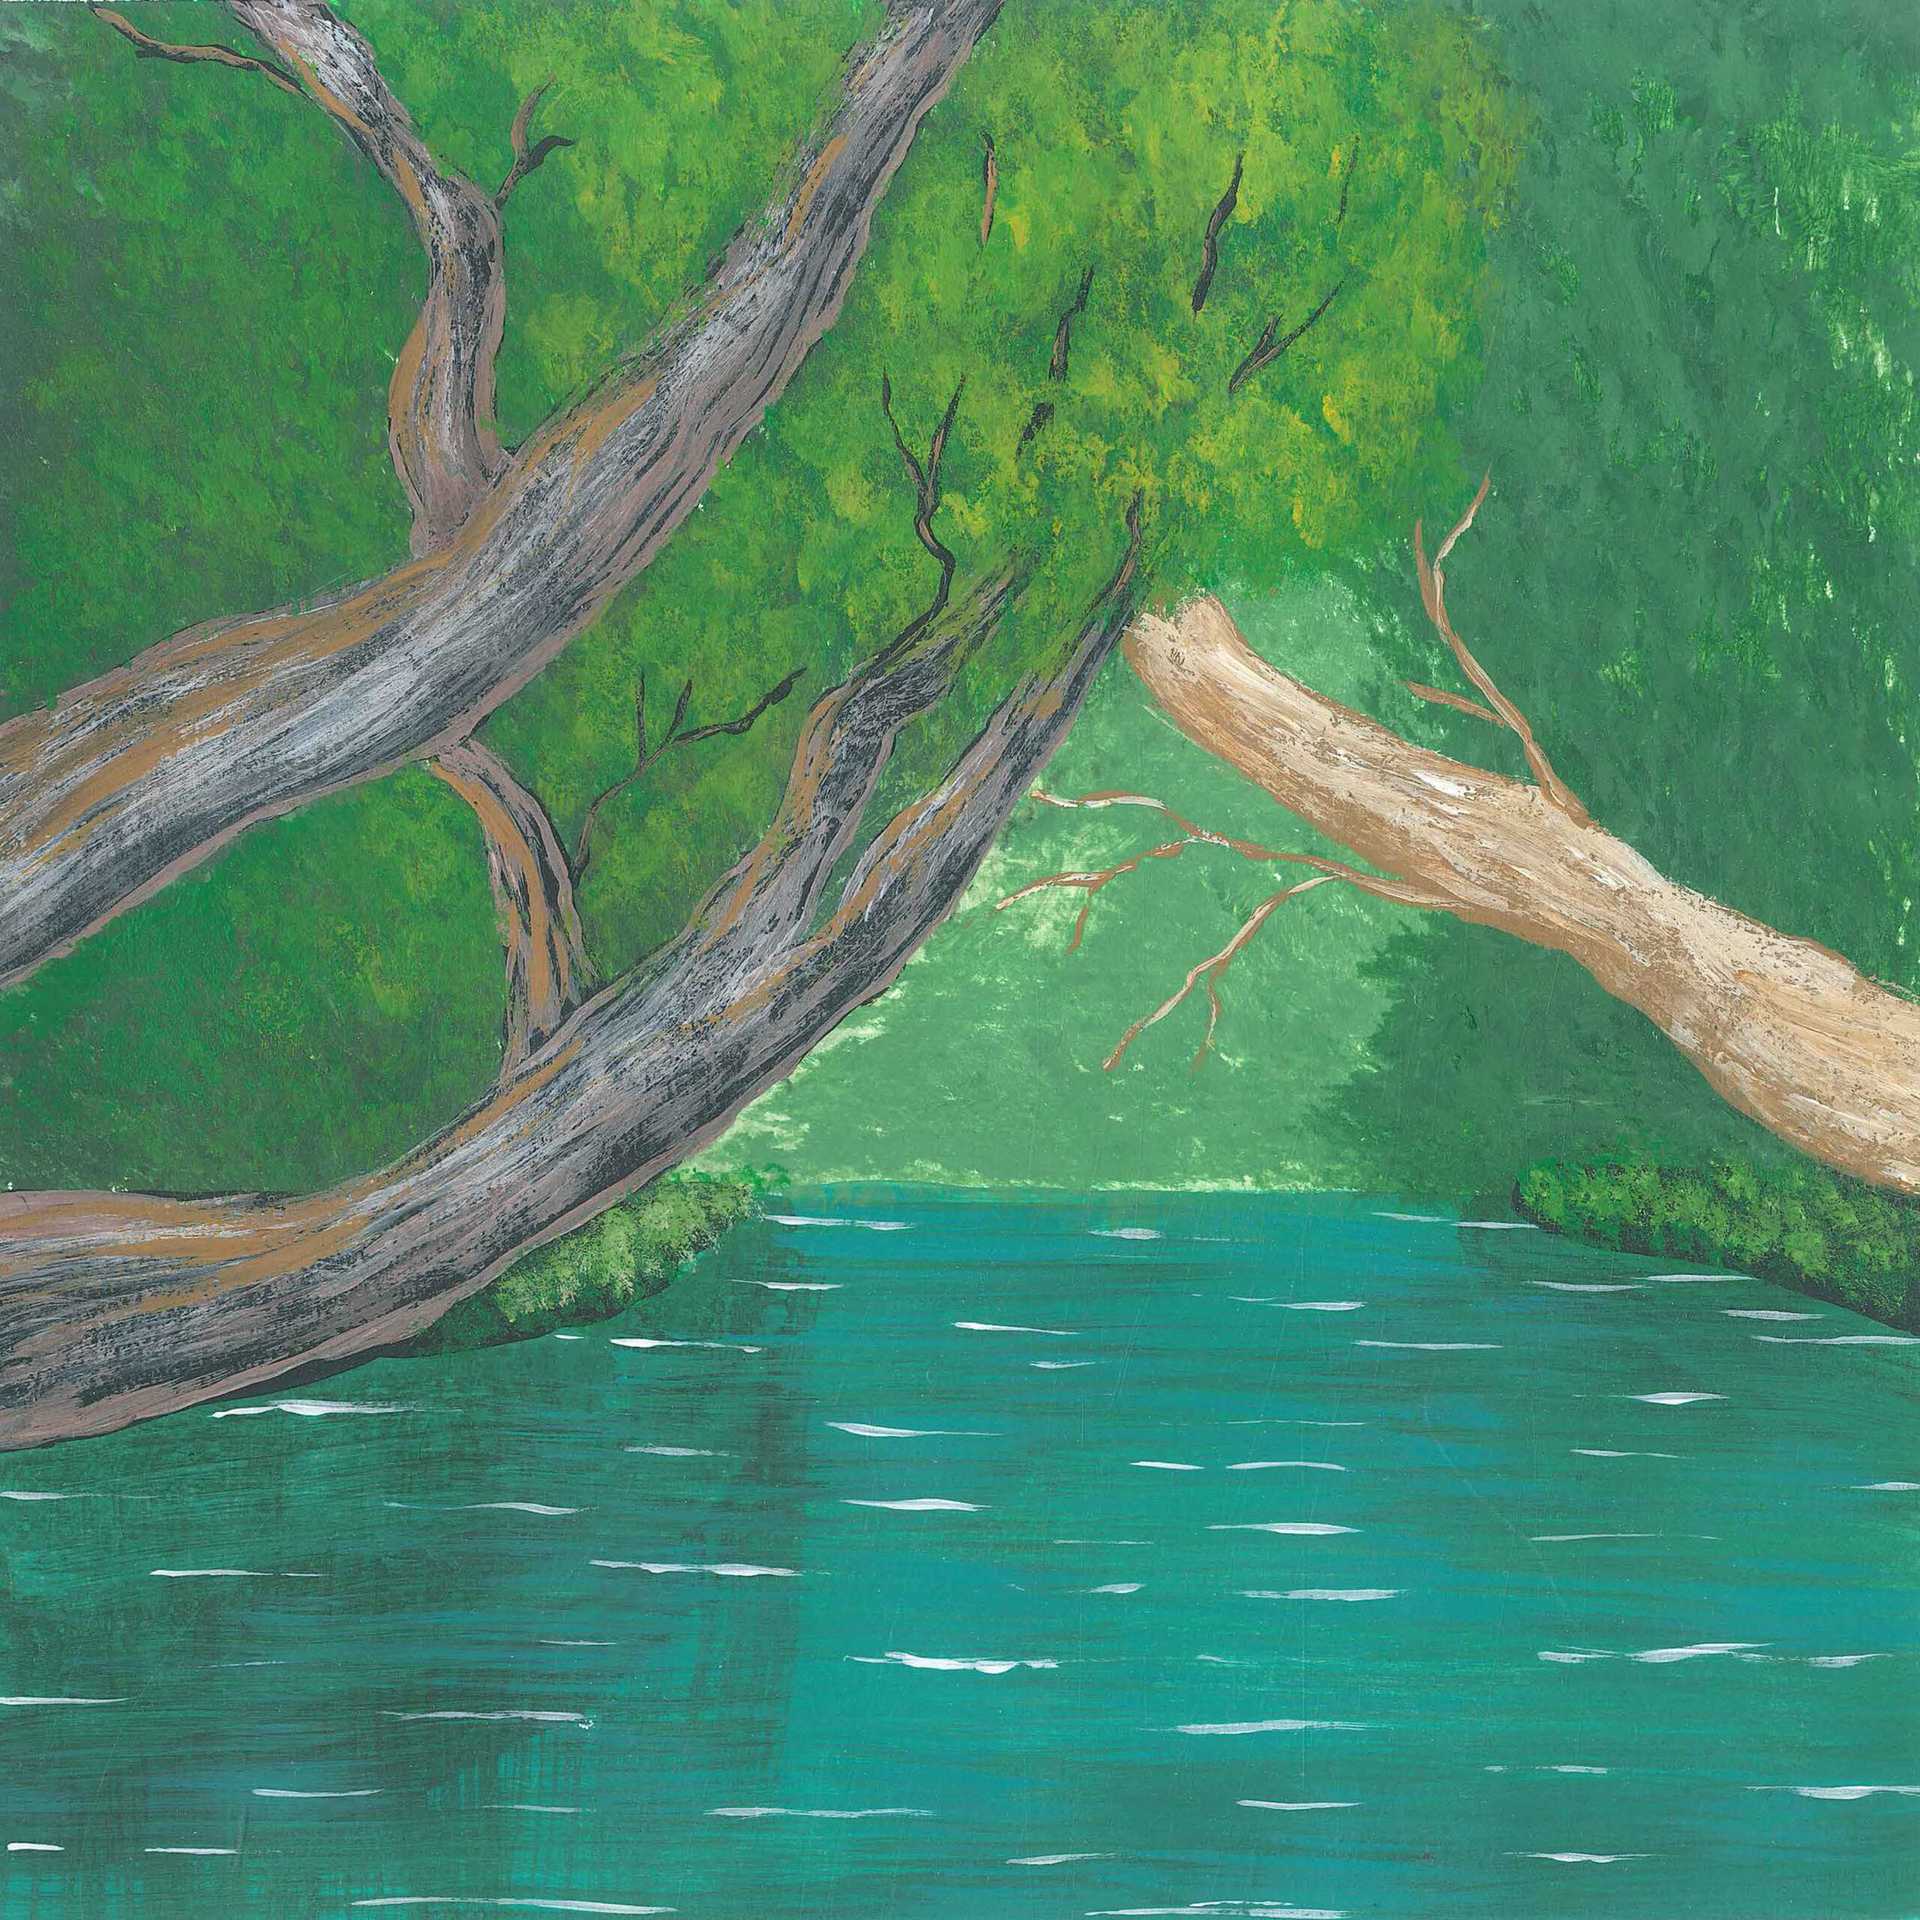 Taman Negara Rainforest Stream - nature landscape painting - earth.fm